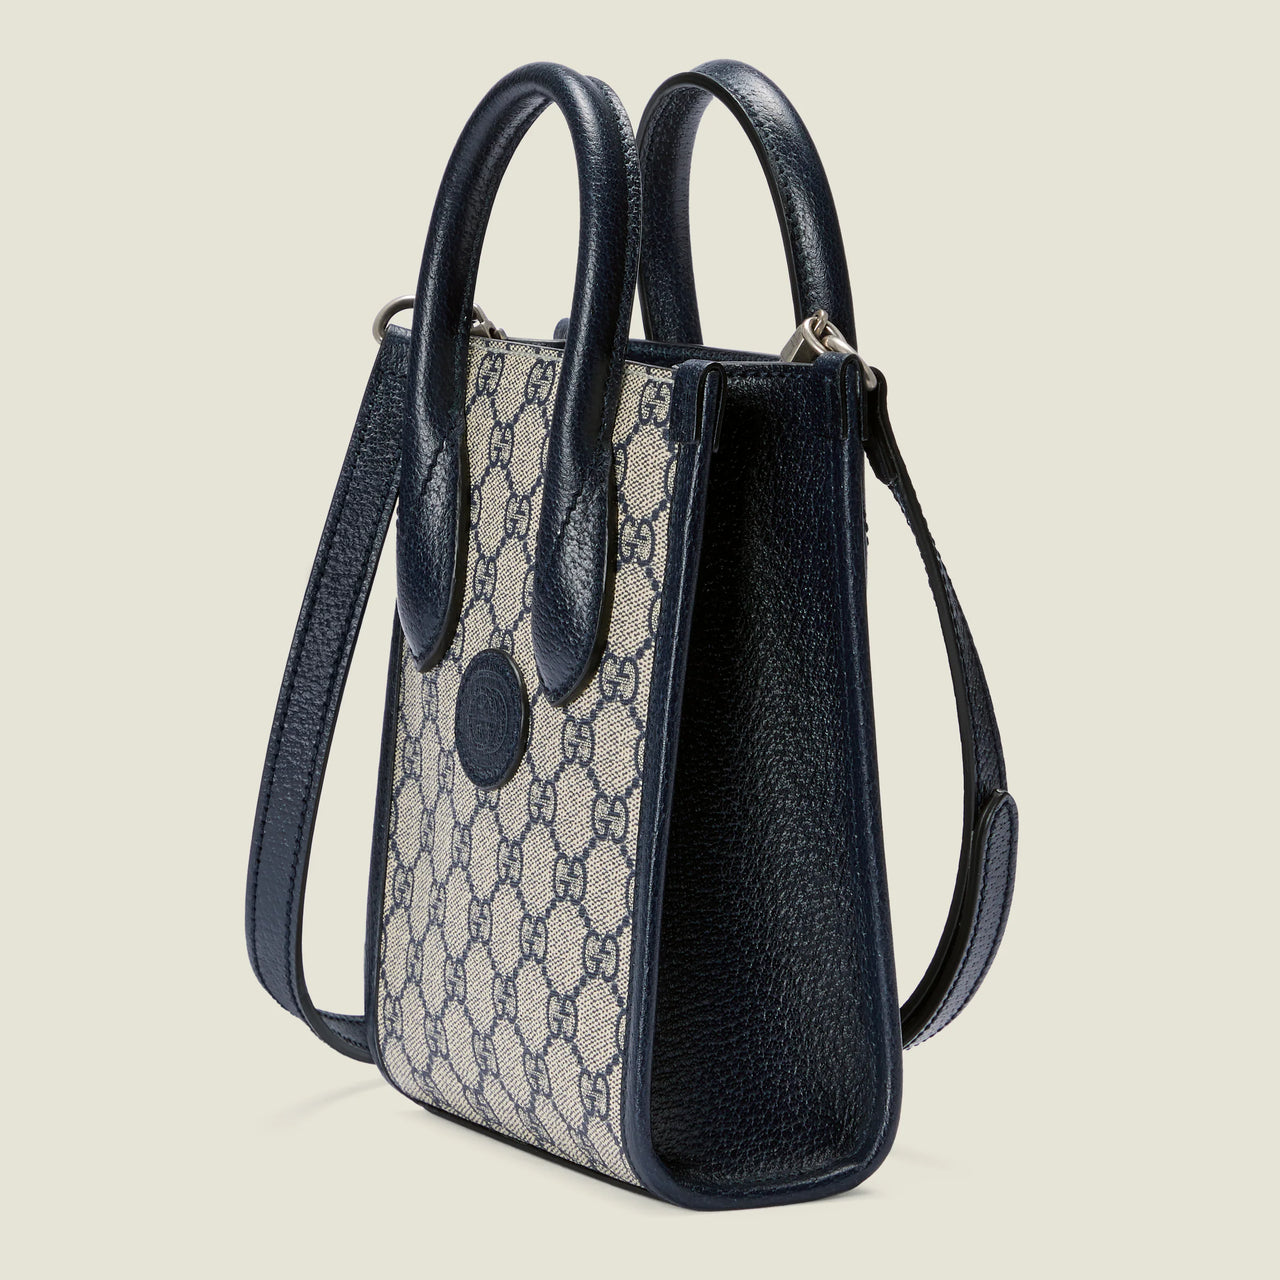 Gucci Mini Tote Bag with Interlocking G (Beige and Blue)